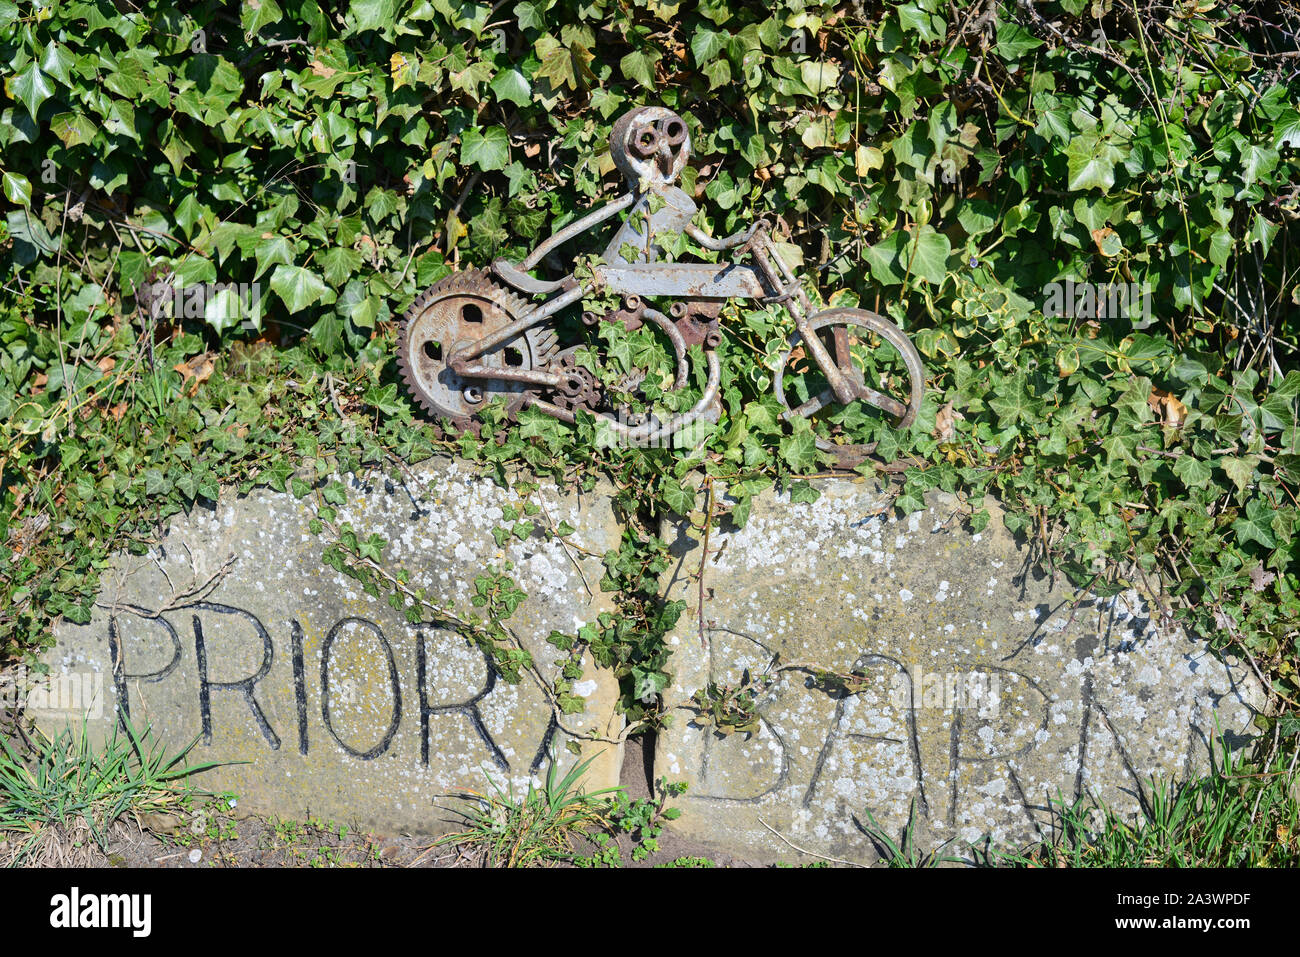 roadside heath robinson style sculpture of figure riding motor bike united kingdom Stock Photo